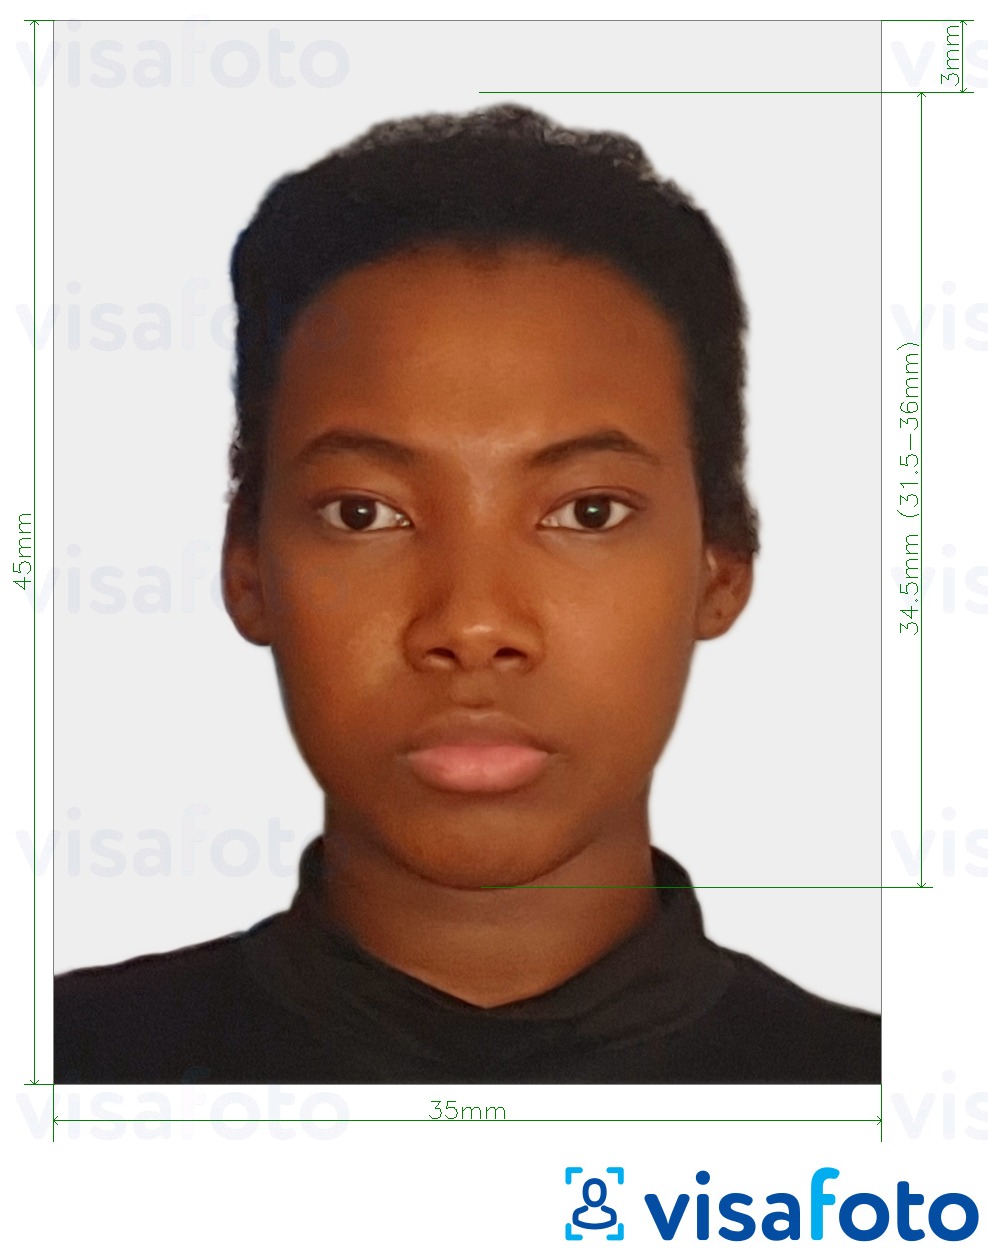 نمونه ی یک عکس برای عکس پاسپورت سنت کیتس و نویس 35x45 میلیمتر (1.77x1.38 